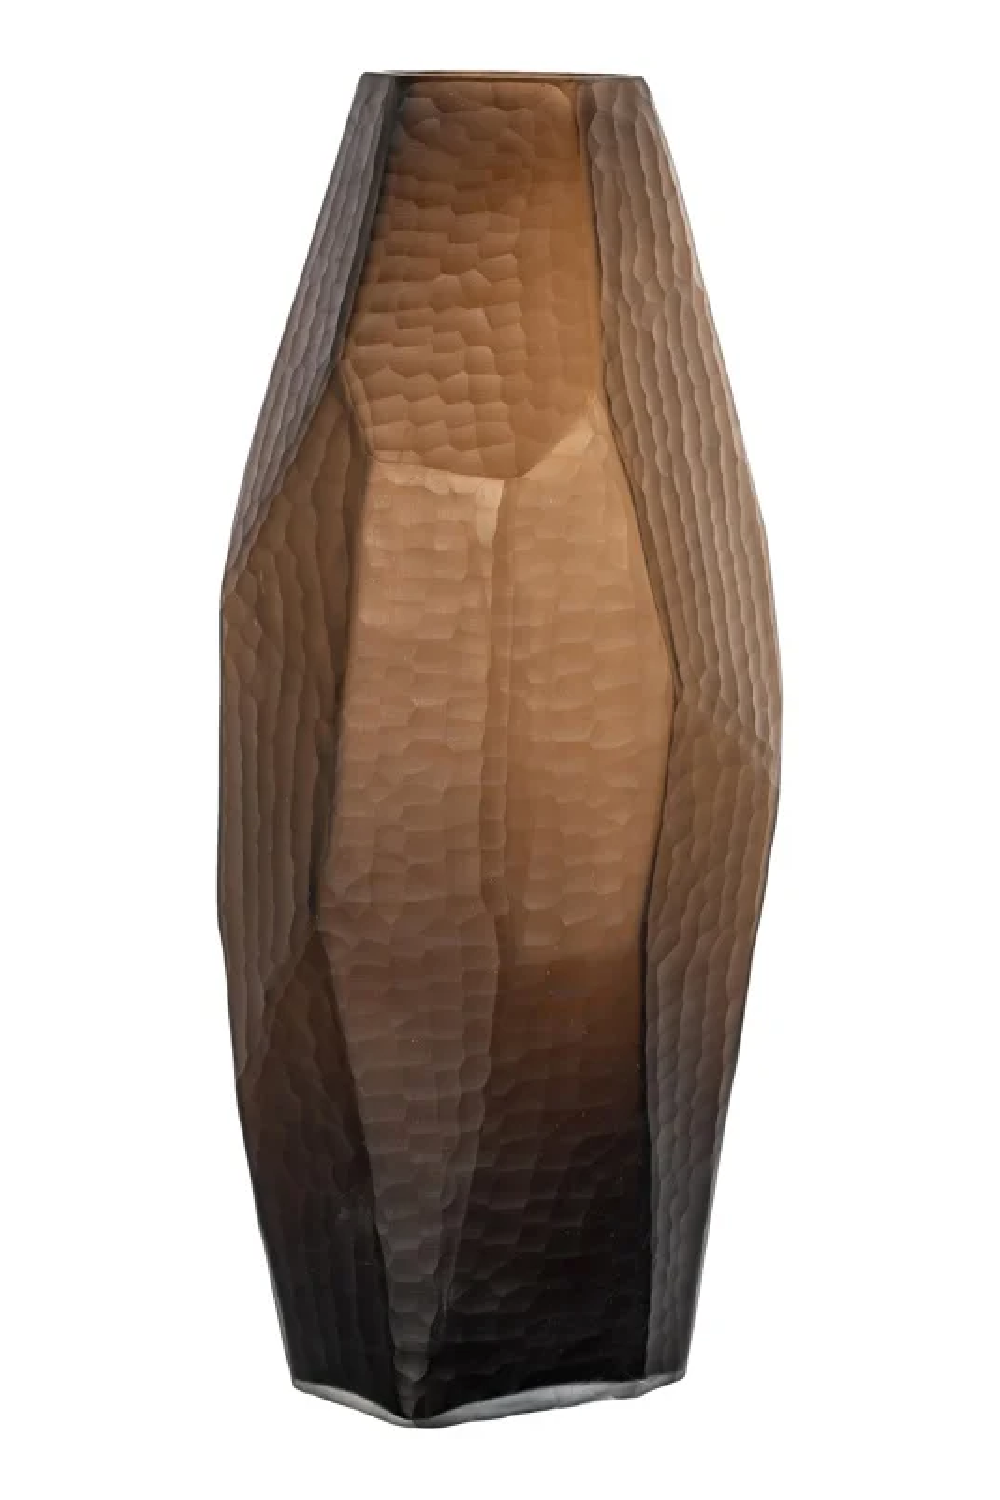 Amber Glass Faceted Vase | OROA Sadie | Oroa.com